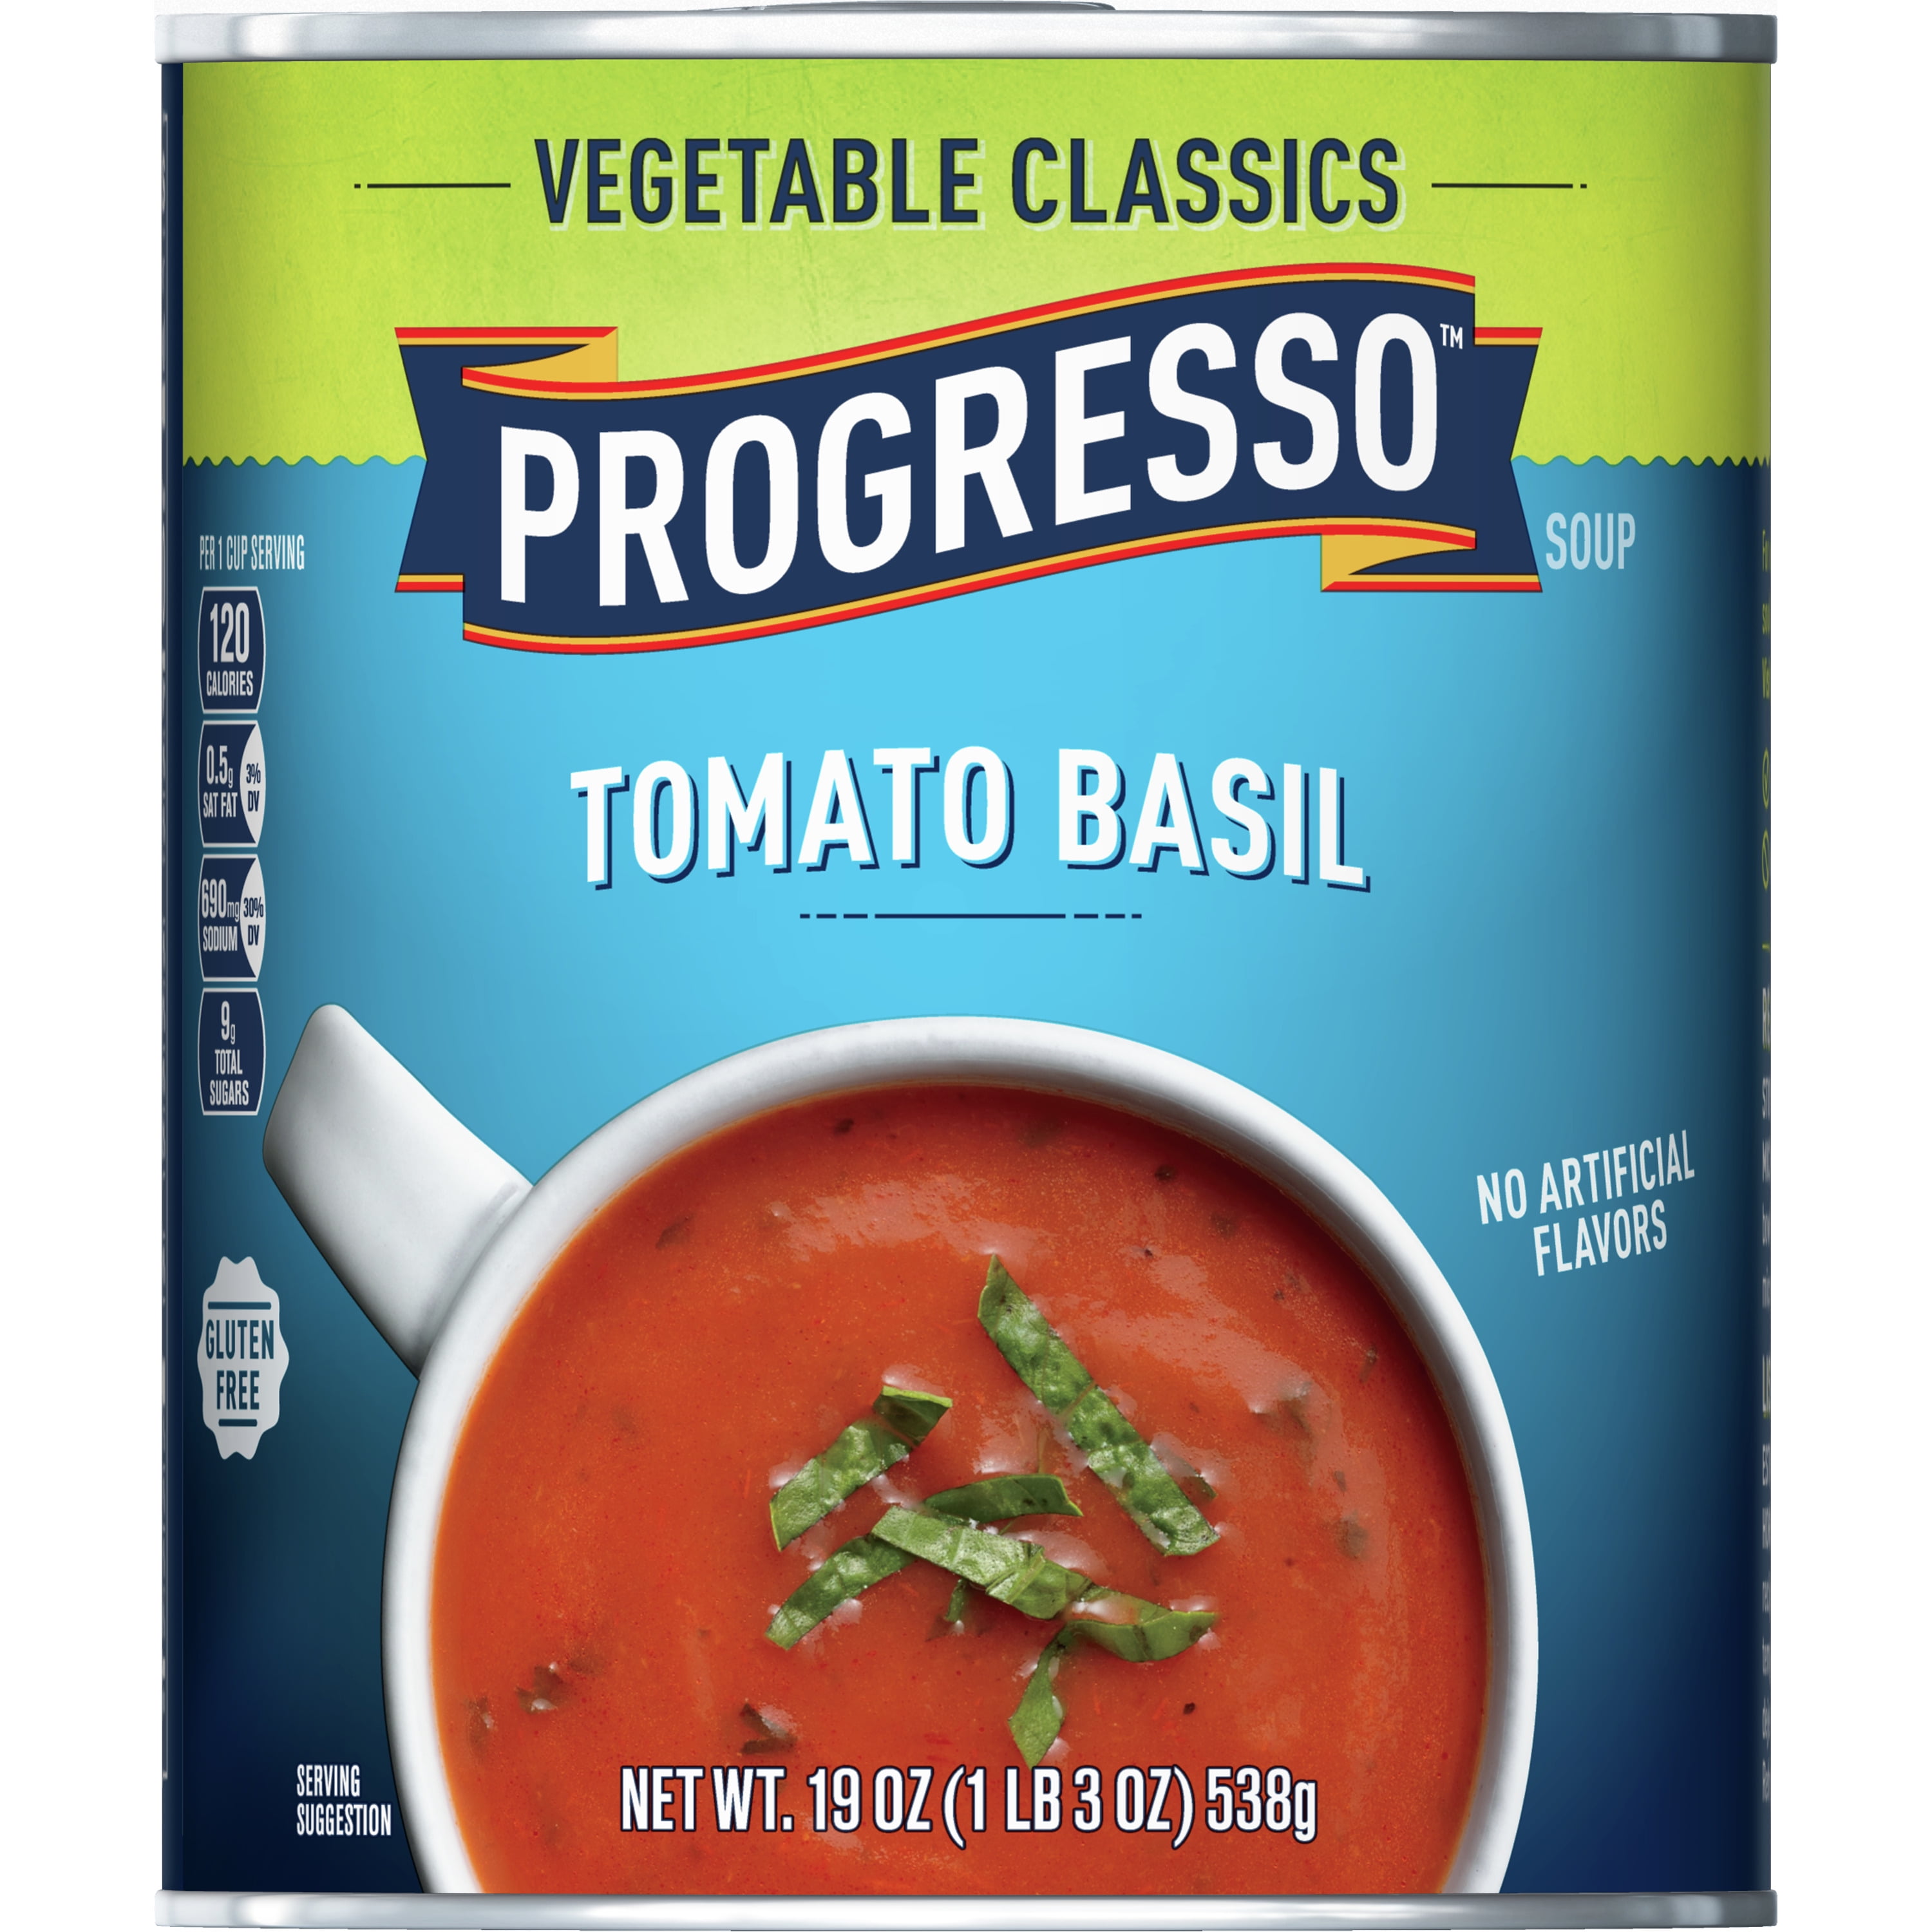 Progresso Vegetable Classics, Tomato Basil Canned Soup, 19 oz.